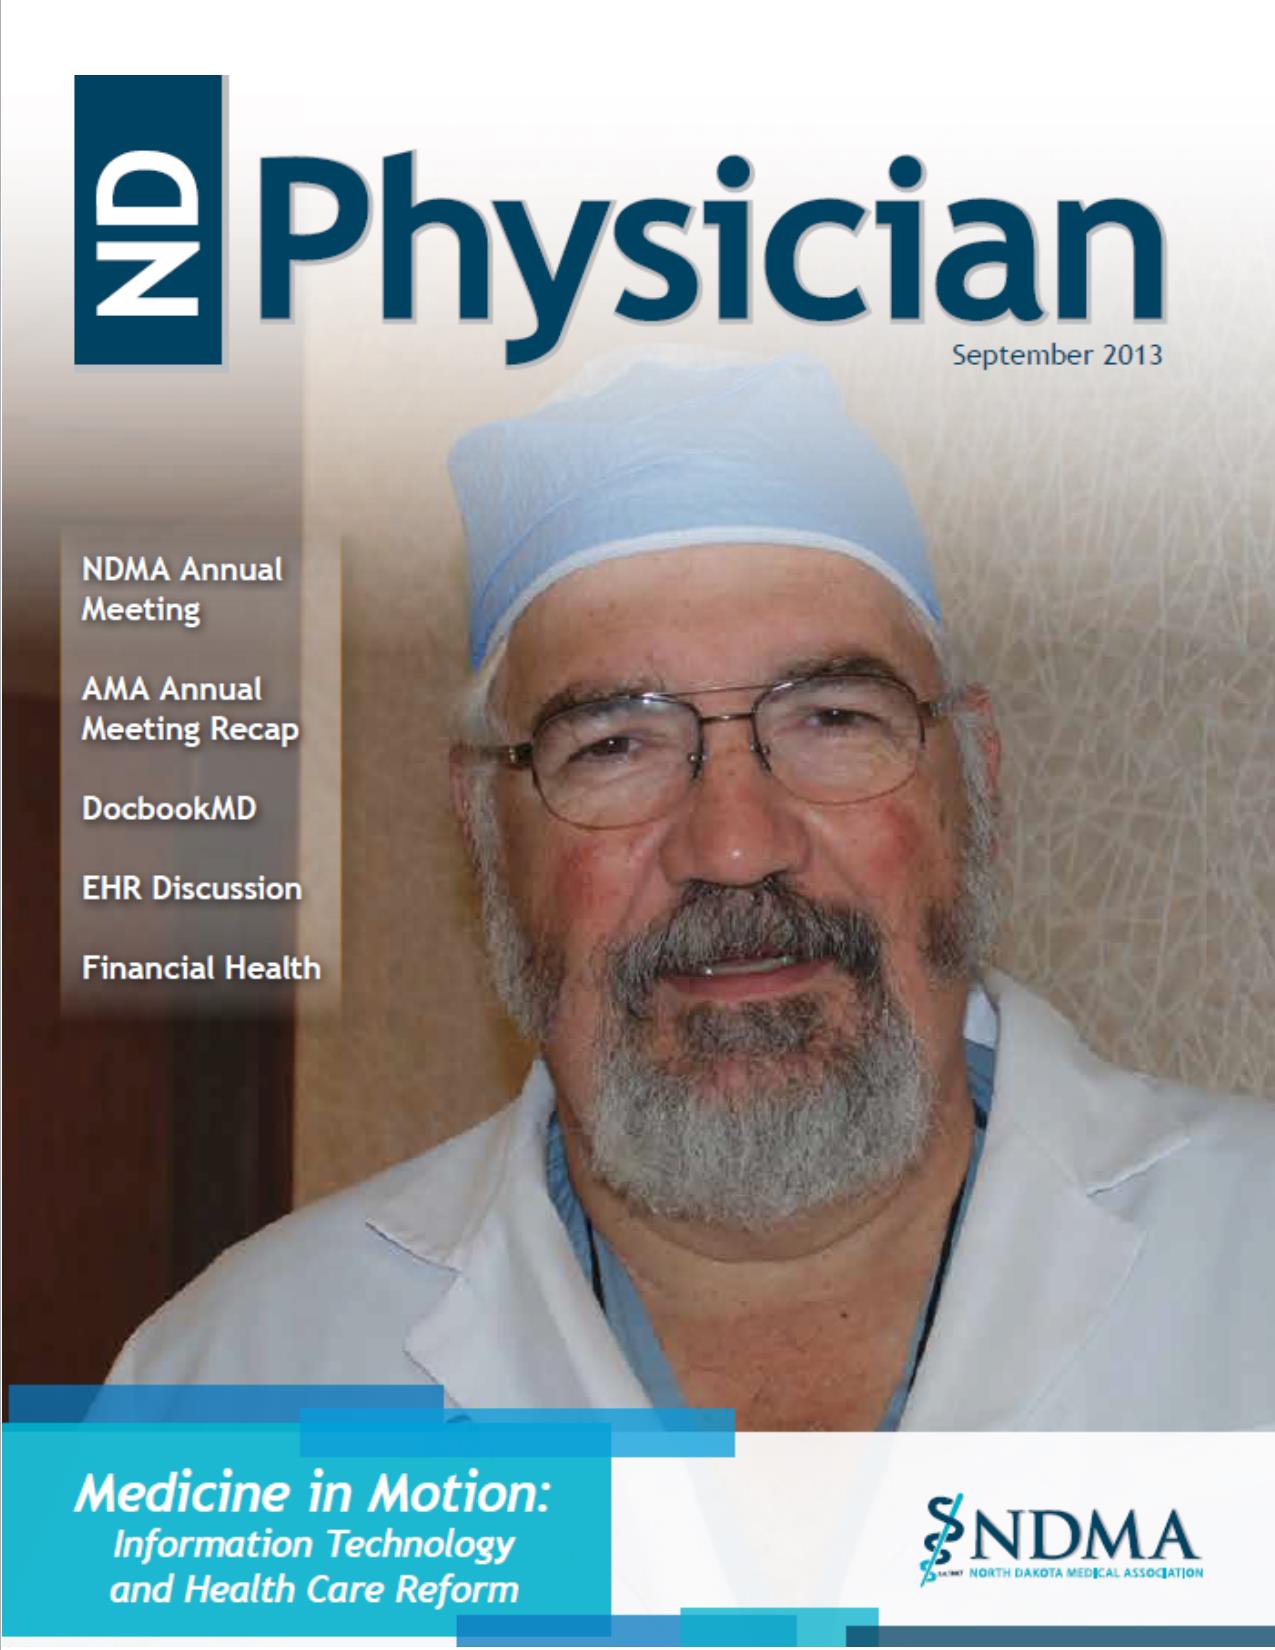 ND Physician September 2013 magazine cover